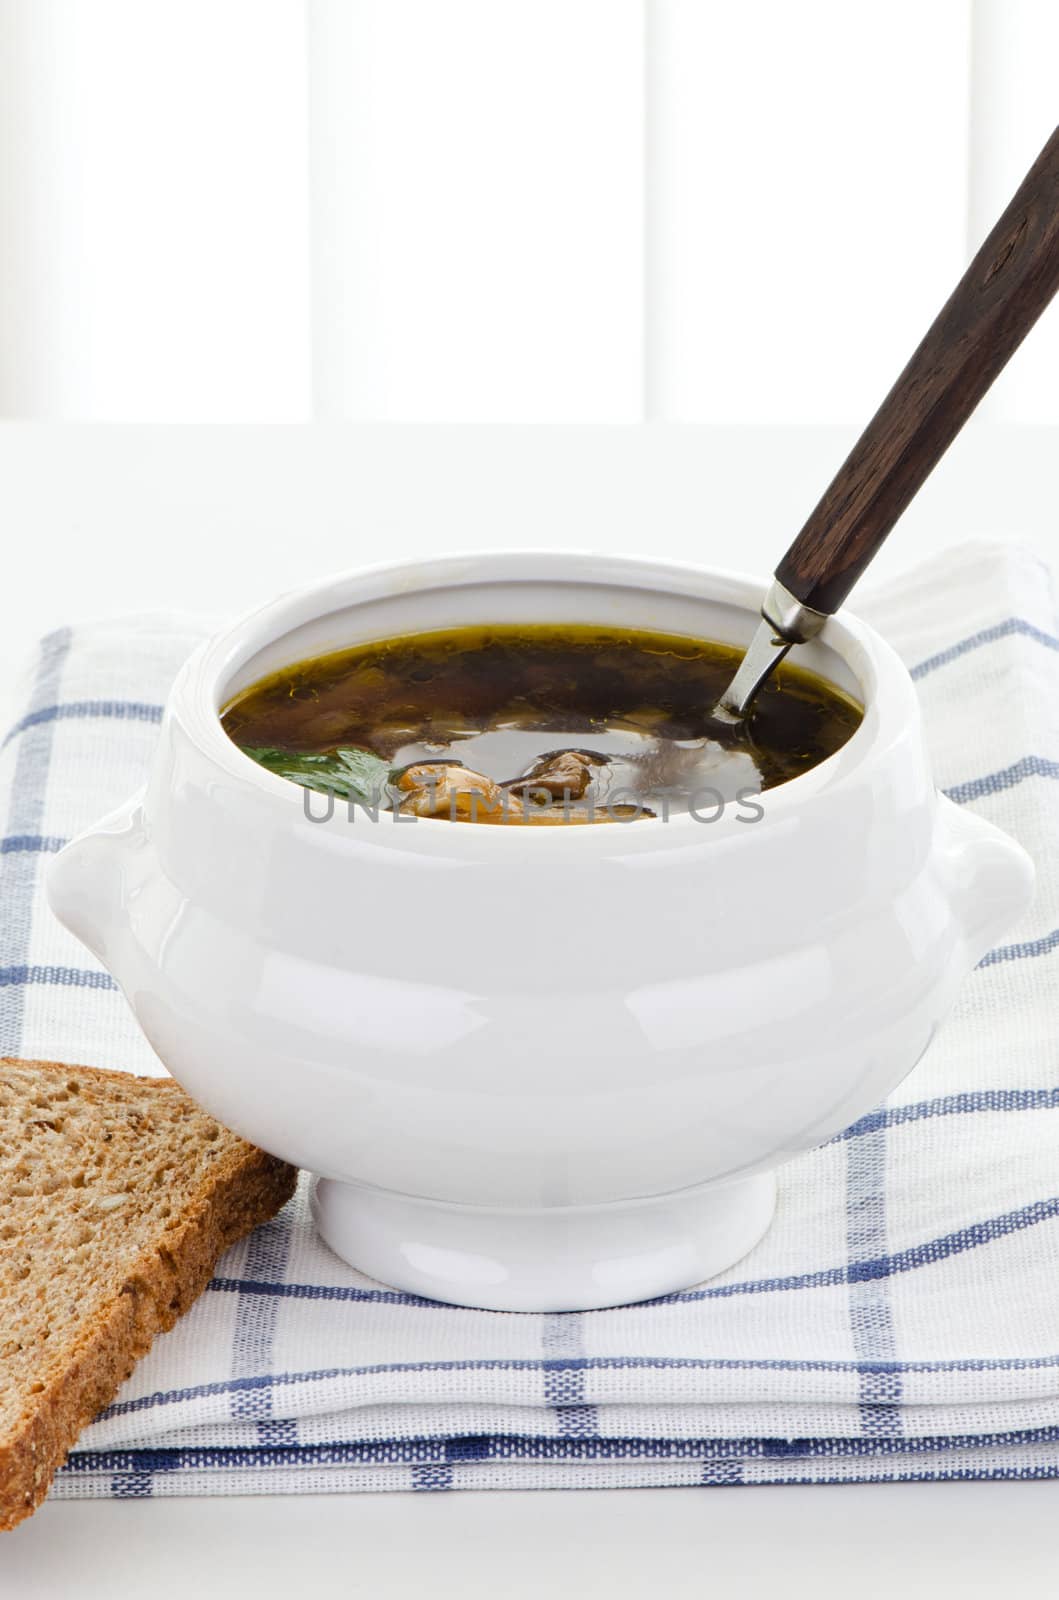 Bowl of mushroom soup with spoon by Nanisimova